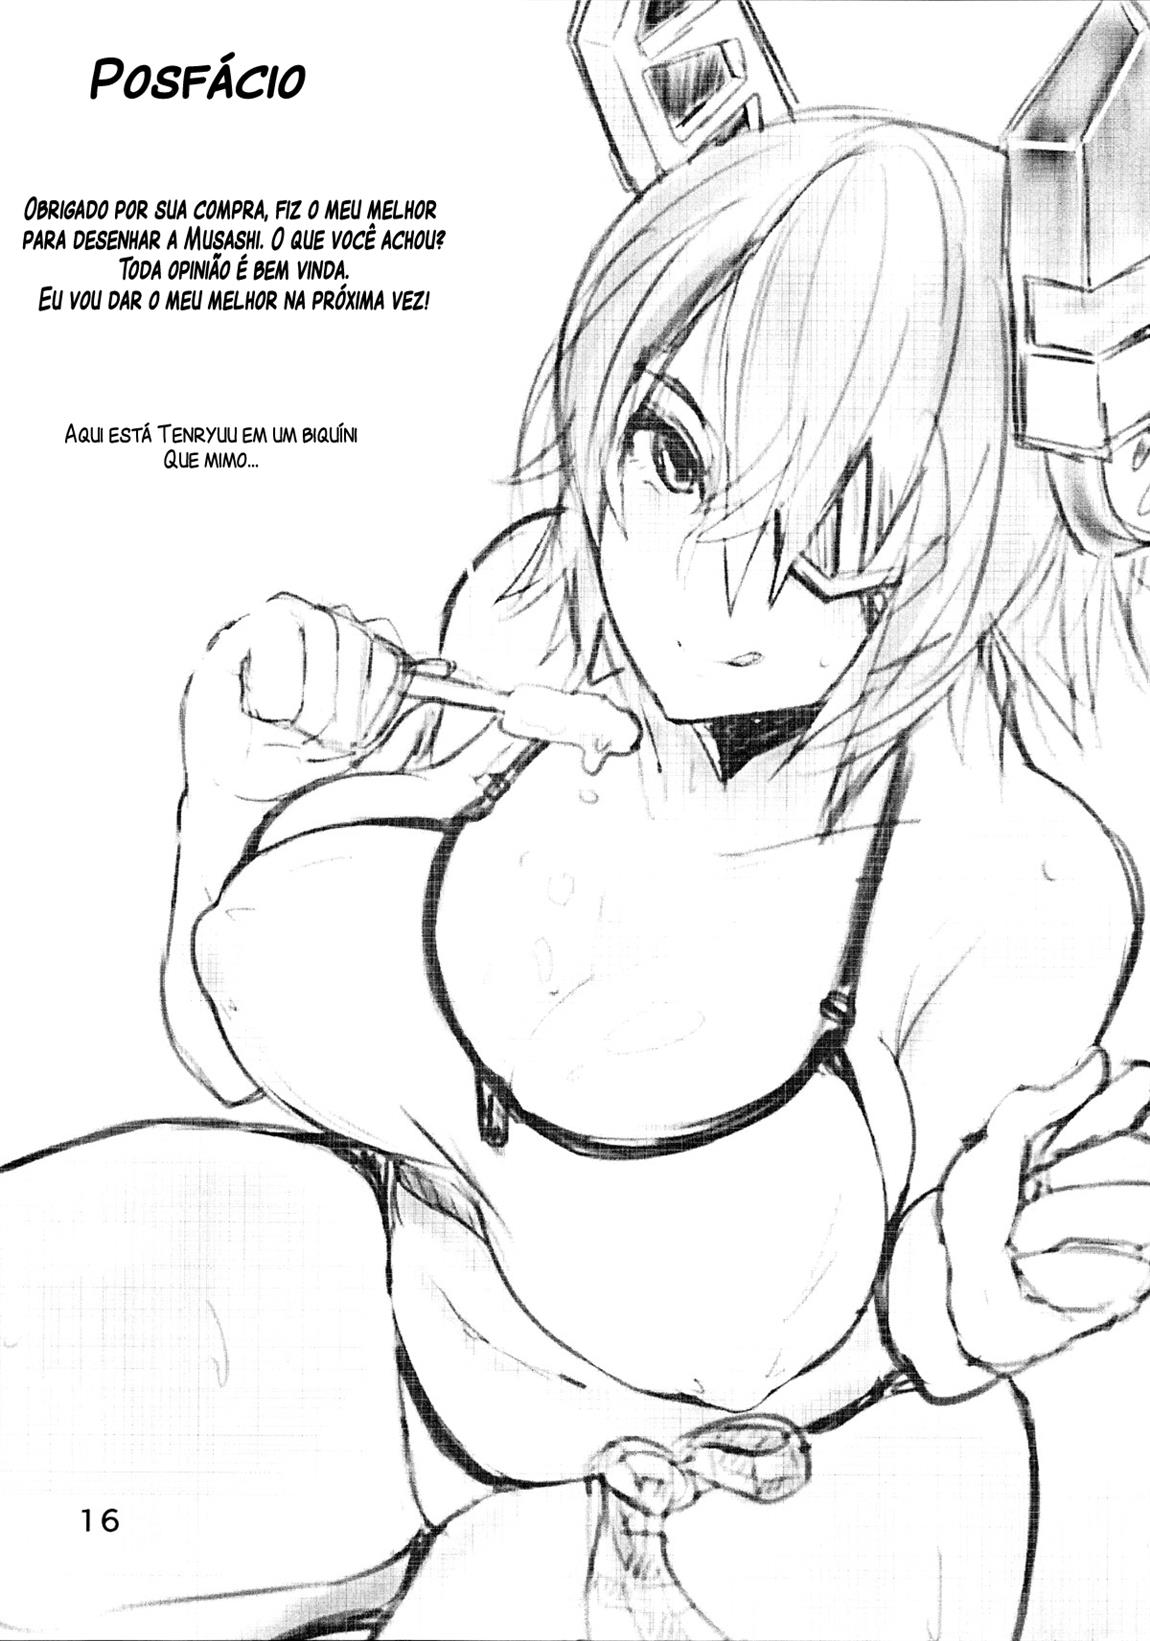 O livro obsceno da senhorita Musashi